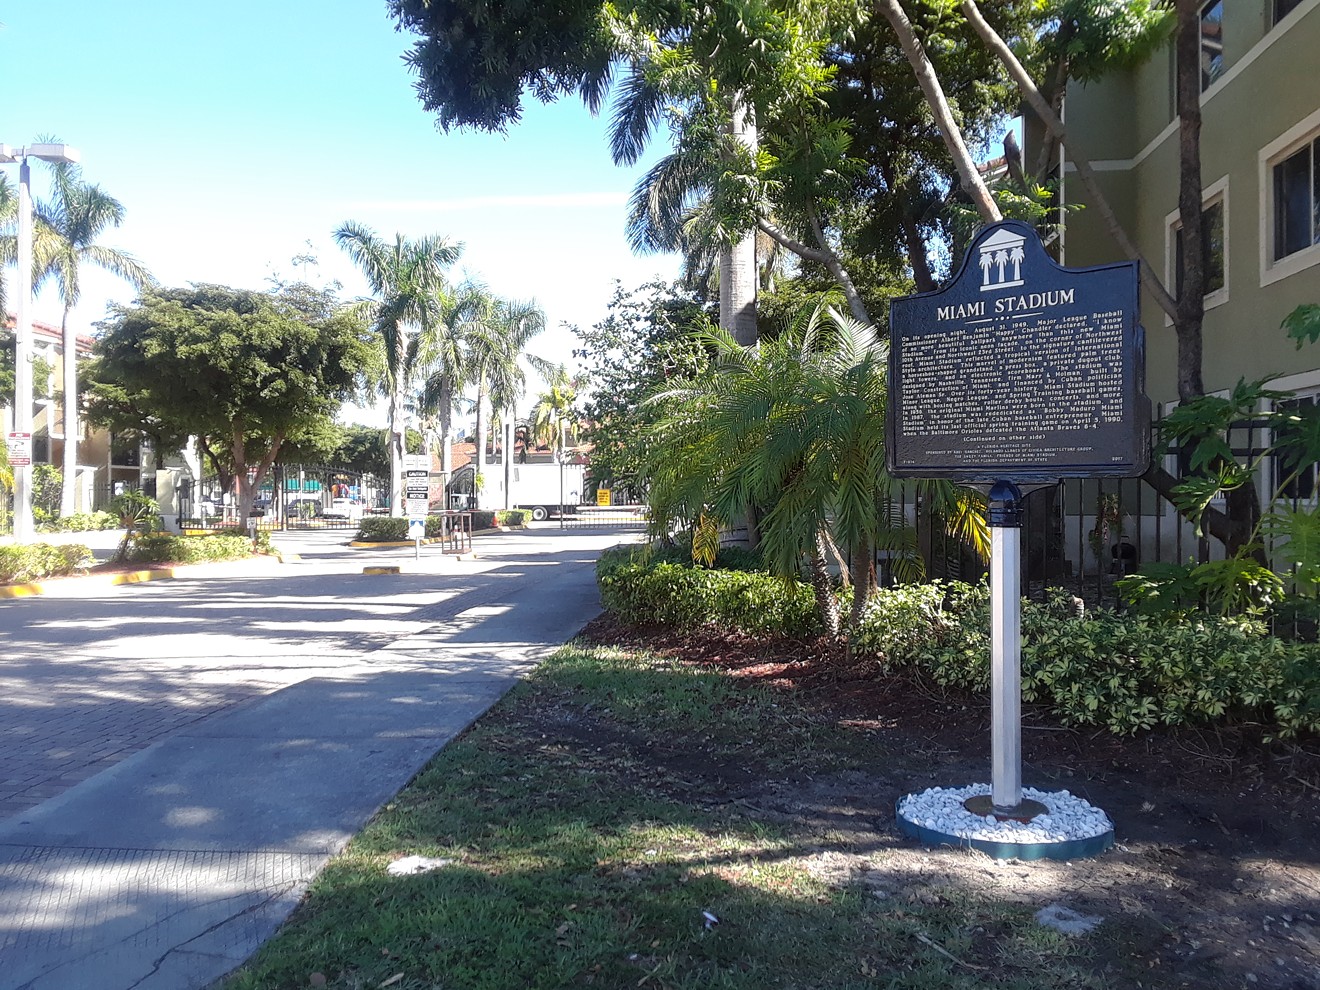 The Miami Stadium historical marker in Allapattah.